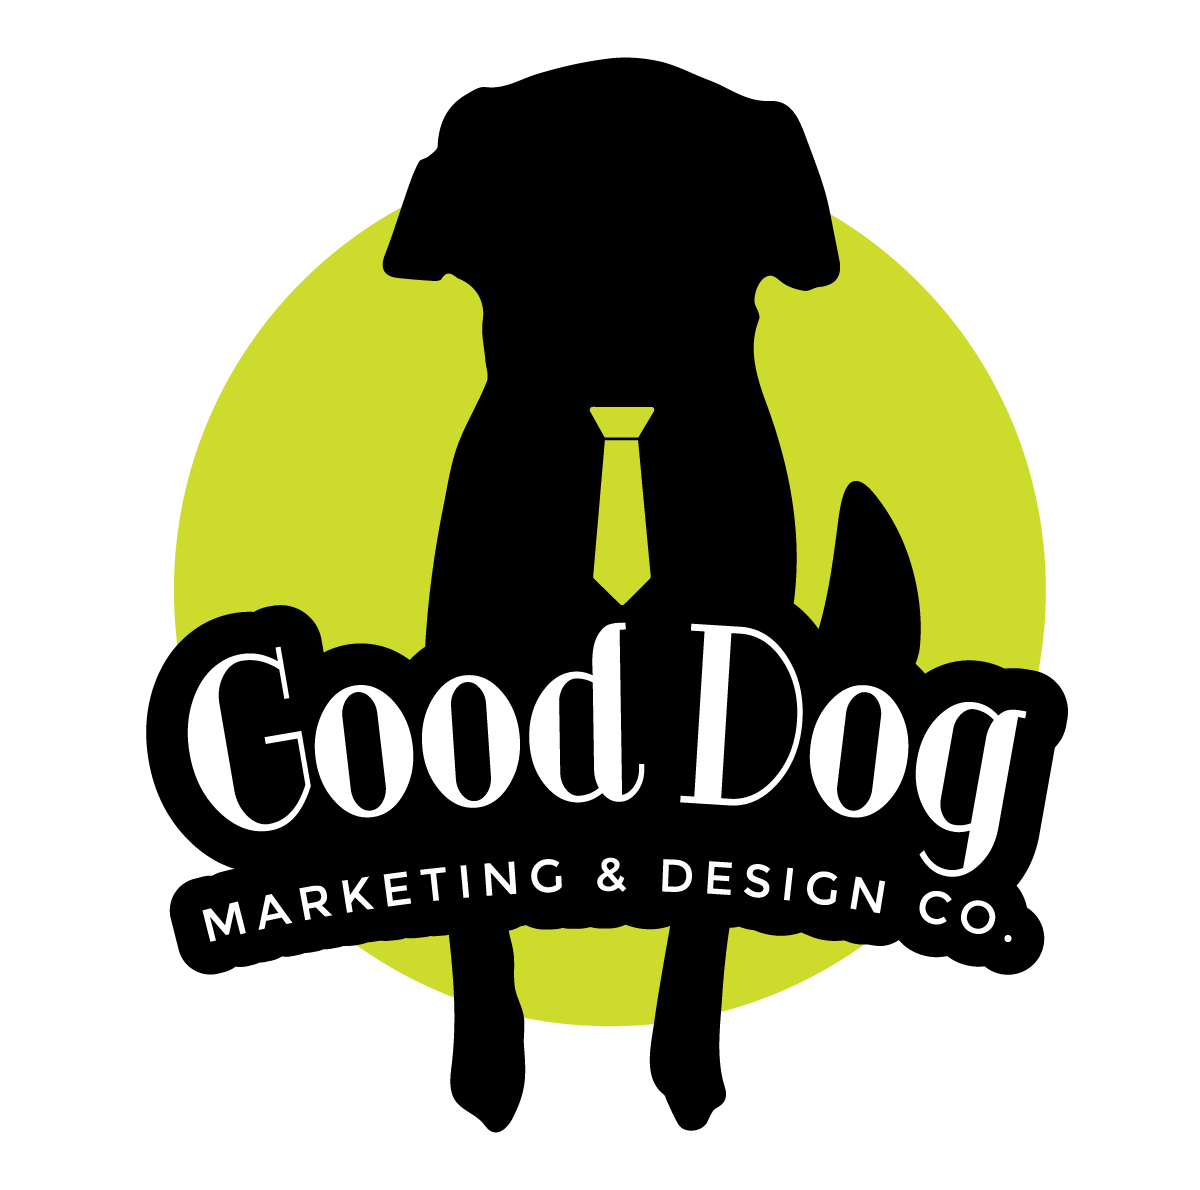 Good Dog Marketing & Design